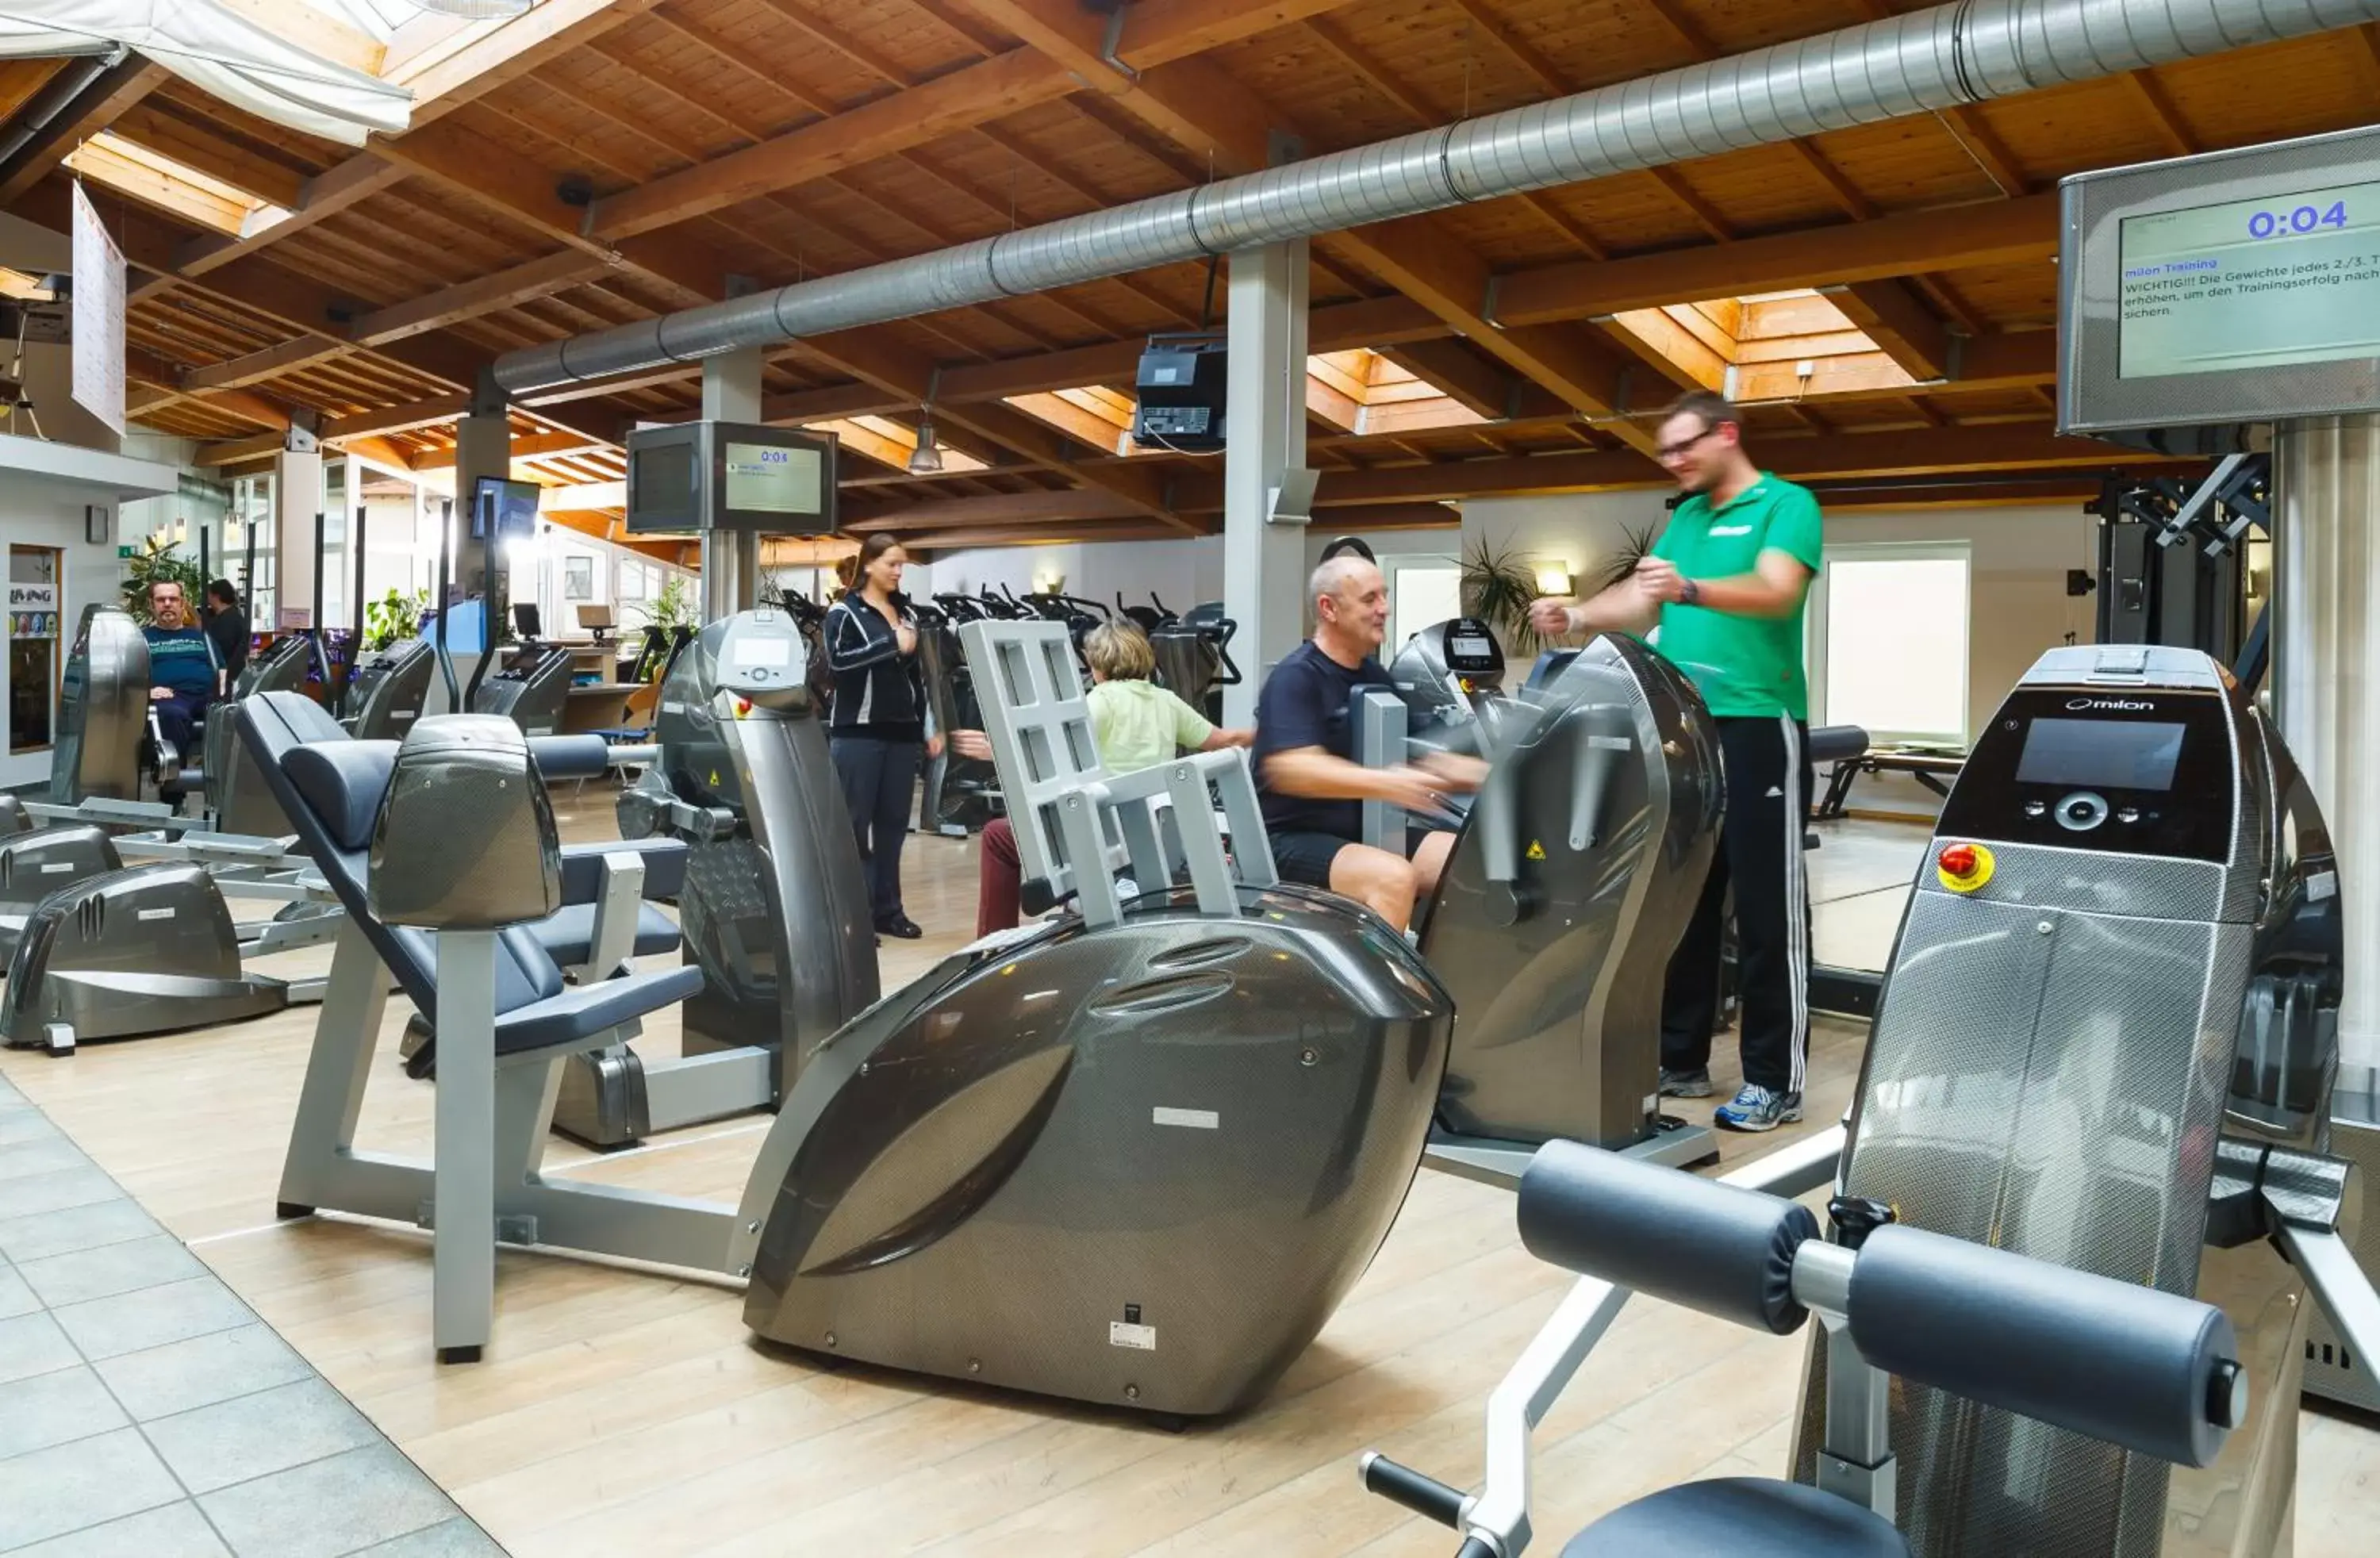 Fitness centre/facilities, Fitness Center/Facilities in Glockenhof